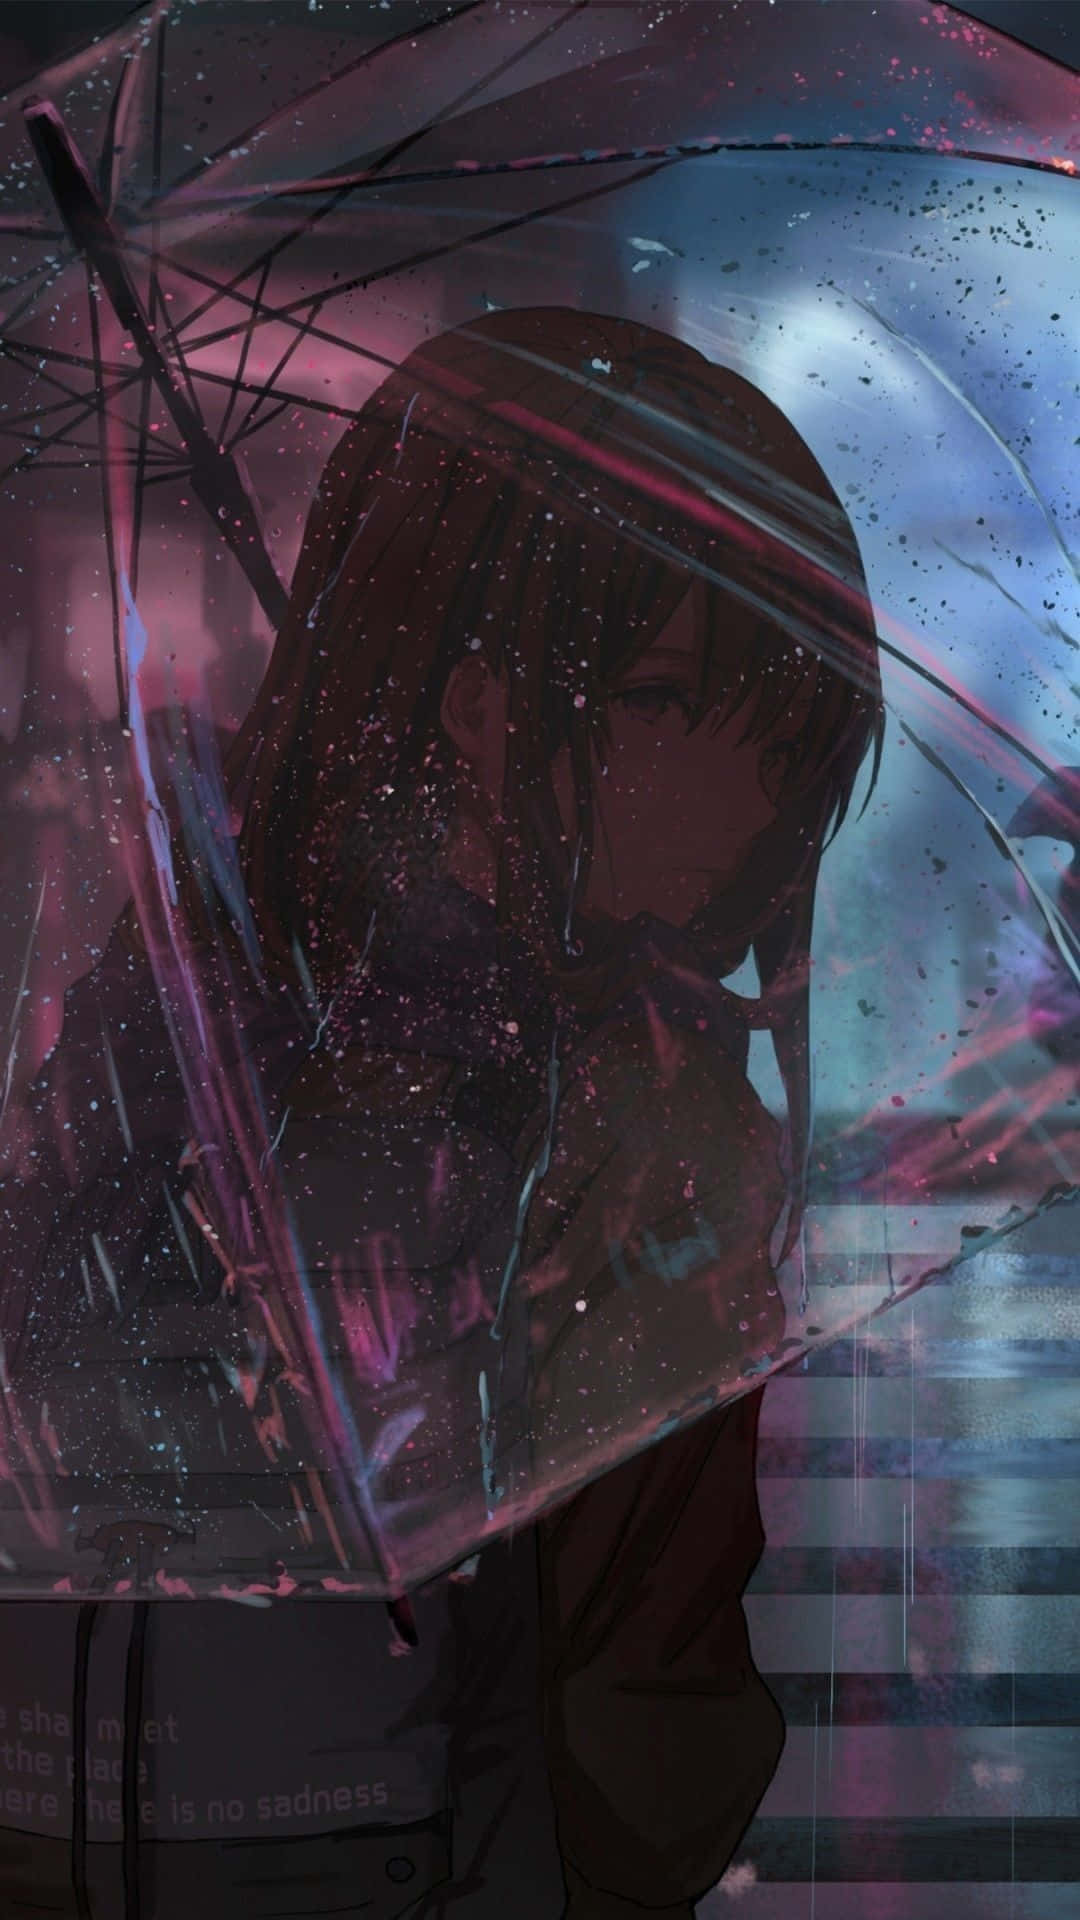 Sad Depressing Anime Girl Umbrella Rain